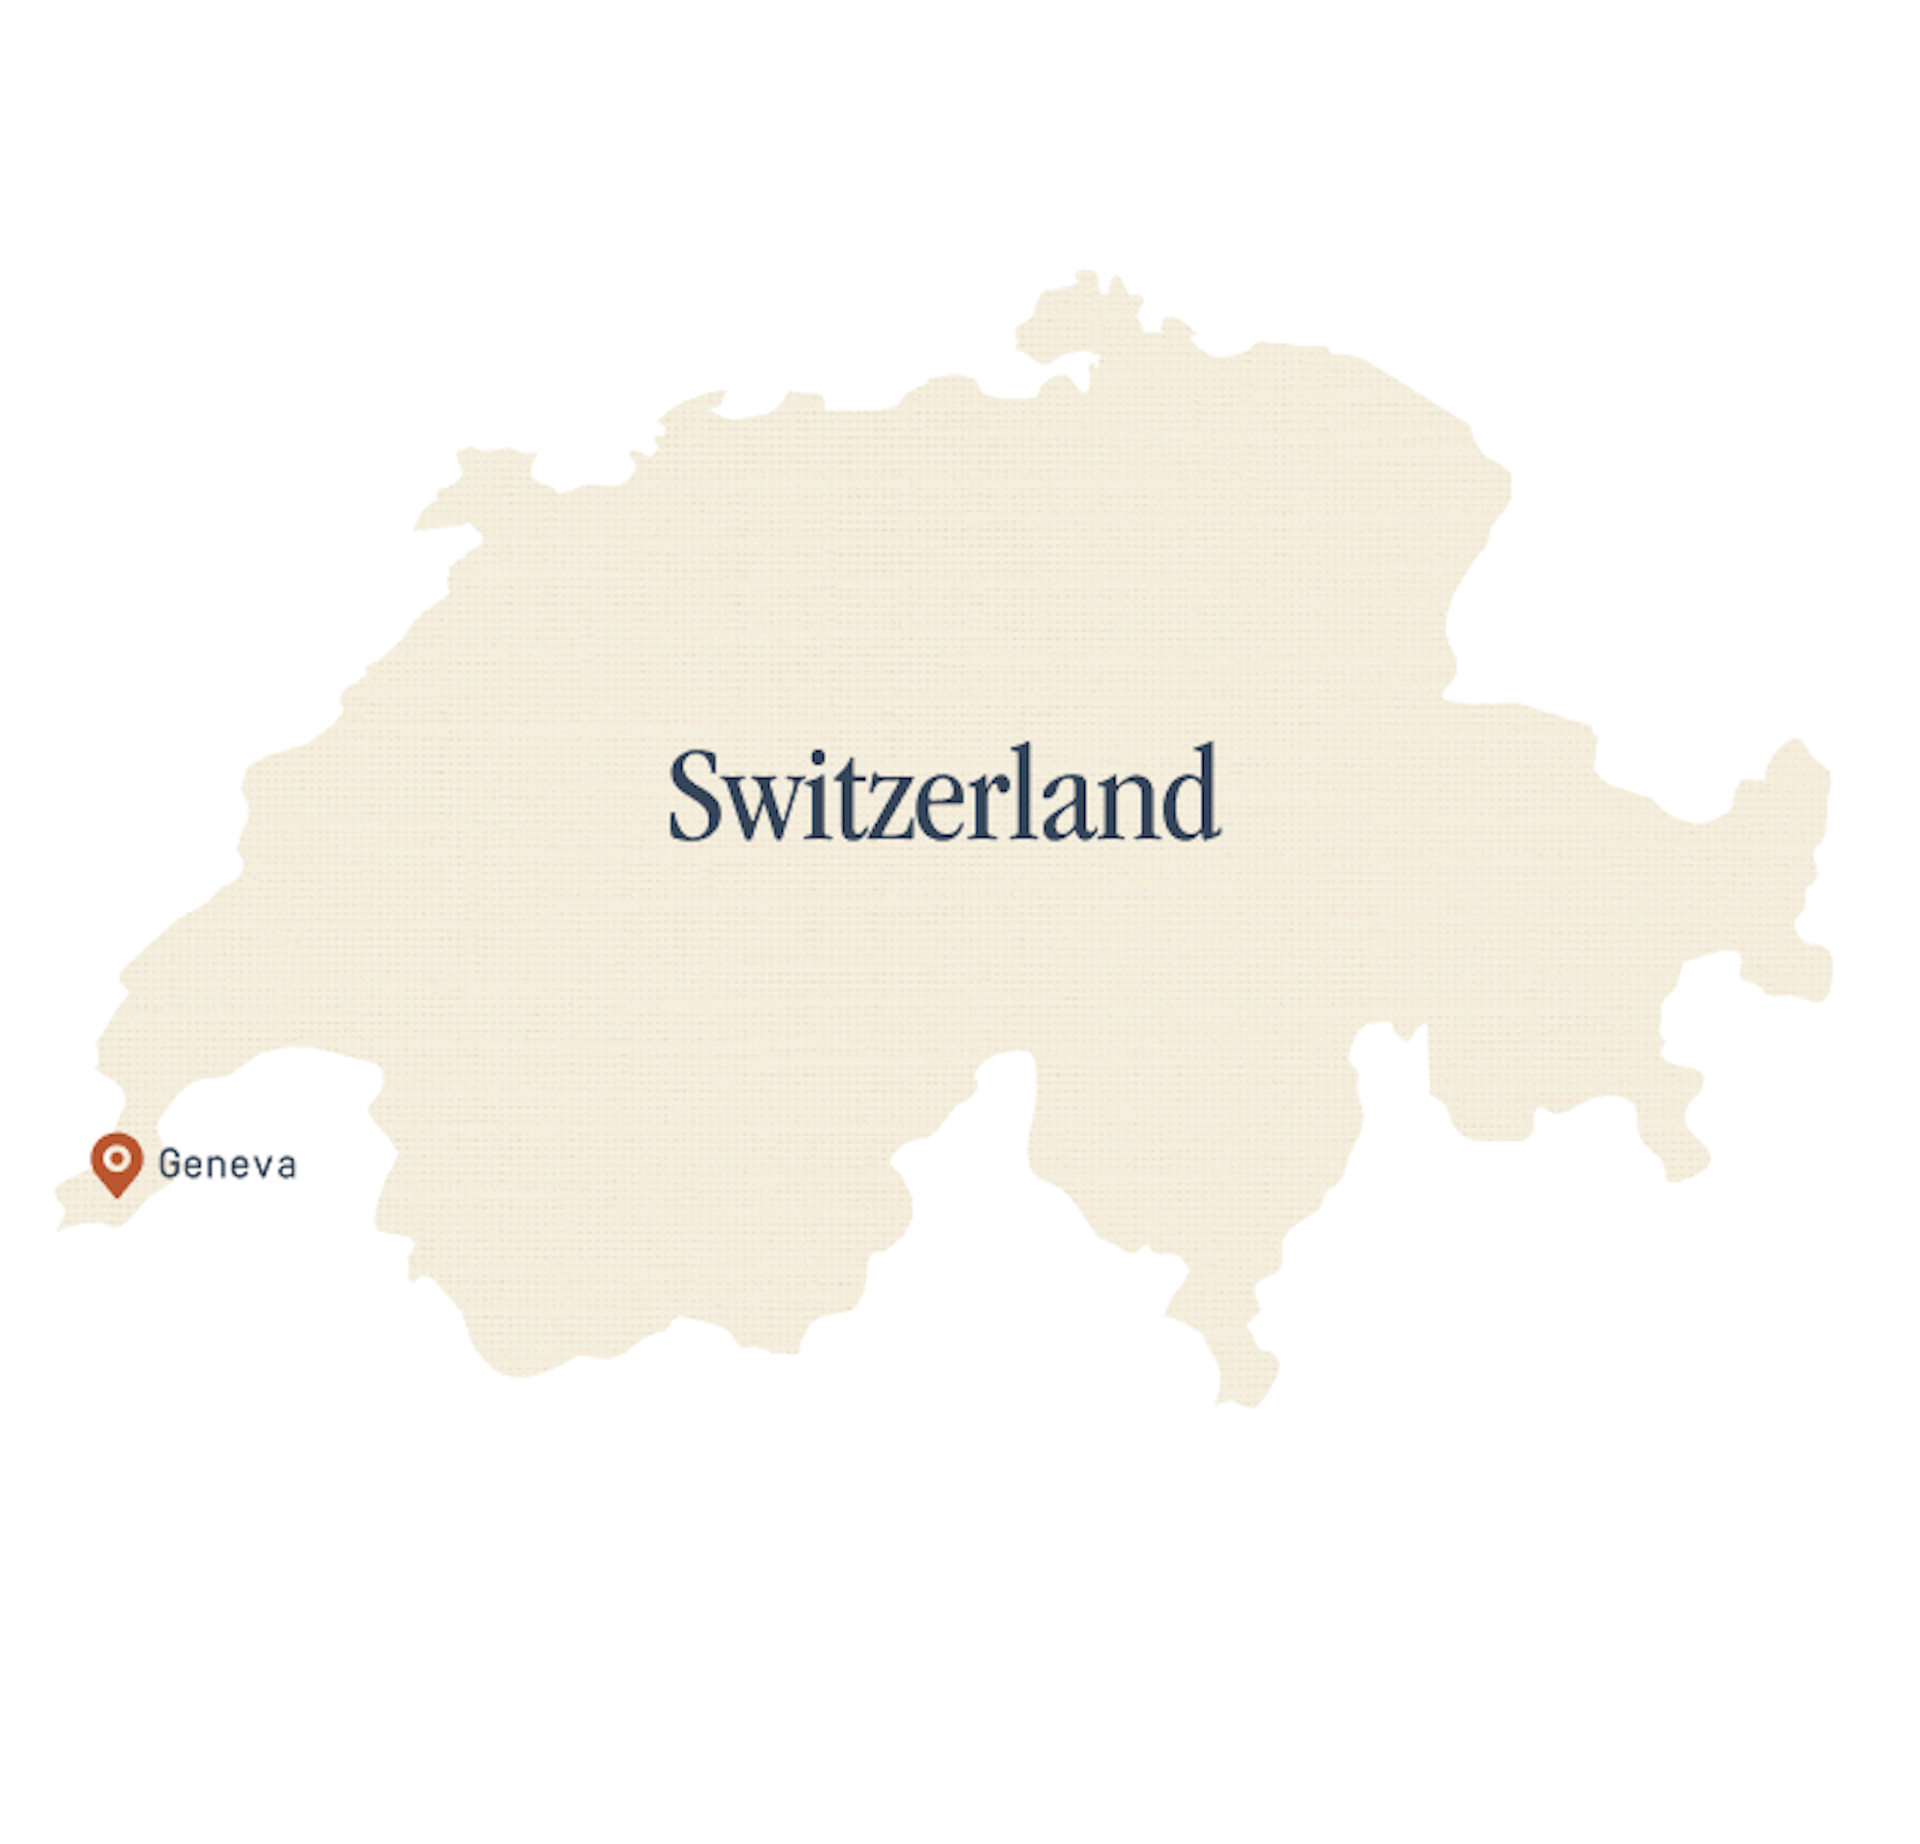 Switzerland map with Geneva highlighted